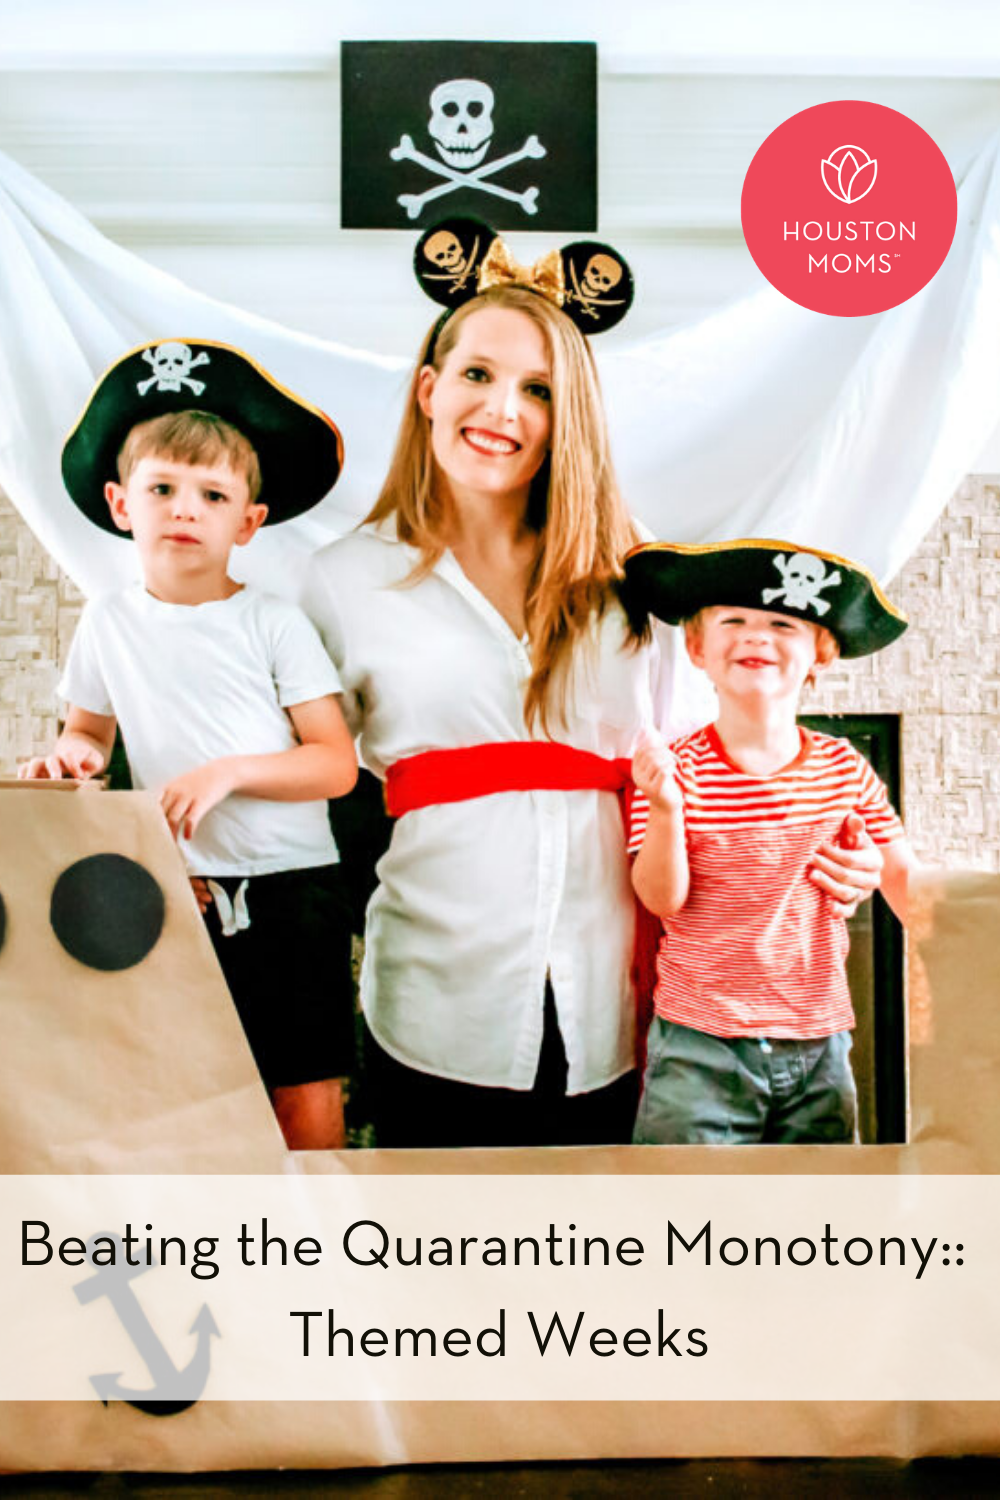 Houston Moms "Beating the Quarantine Monotony:: Themed Weeks" #houstonmoms #houstonmomsblog #momsaroundhouston